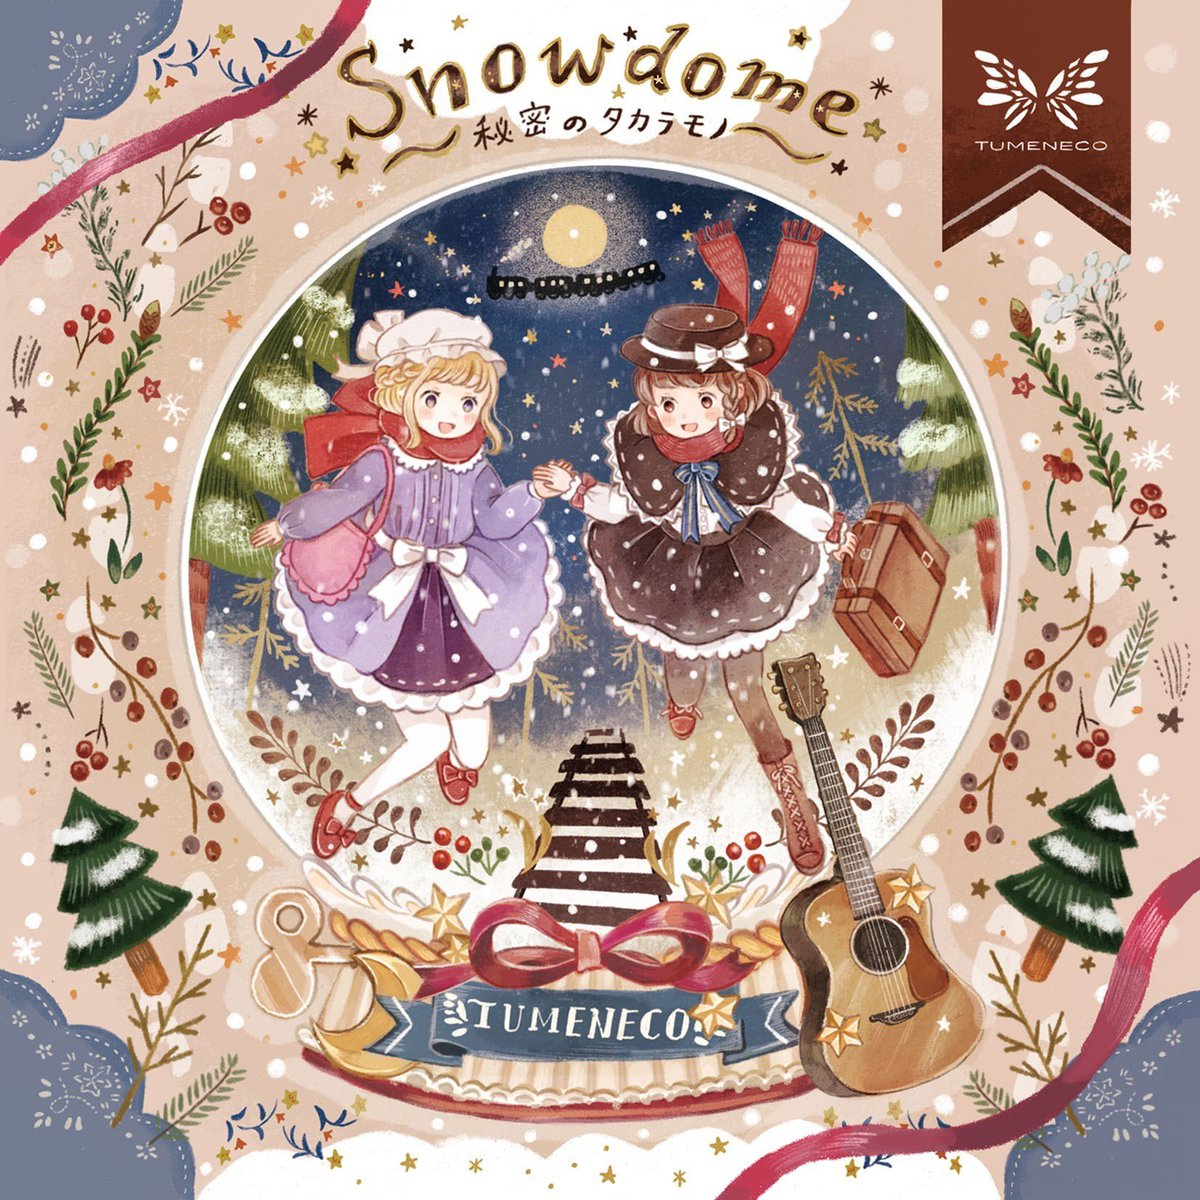 Snowdome ｰ秘密のタカラモノｰ歌词 歌手yukina-专辑Snowdome ｰ秘密のタカラモノｰ-单曲《Snowdome ｰ秘密のタカラモノｰ》LRC歌词下载